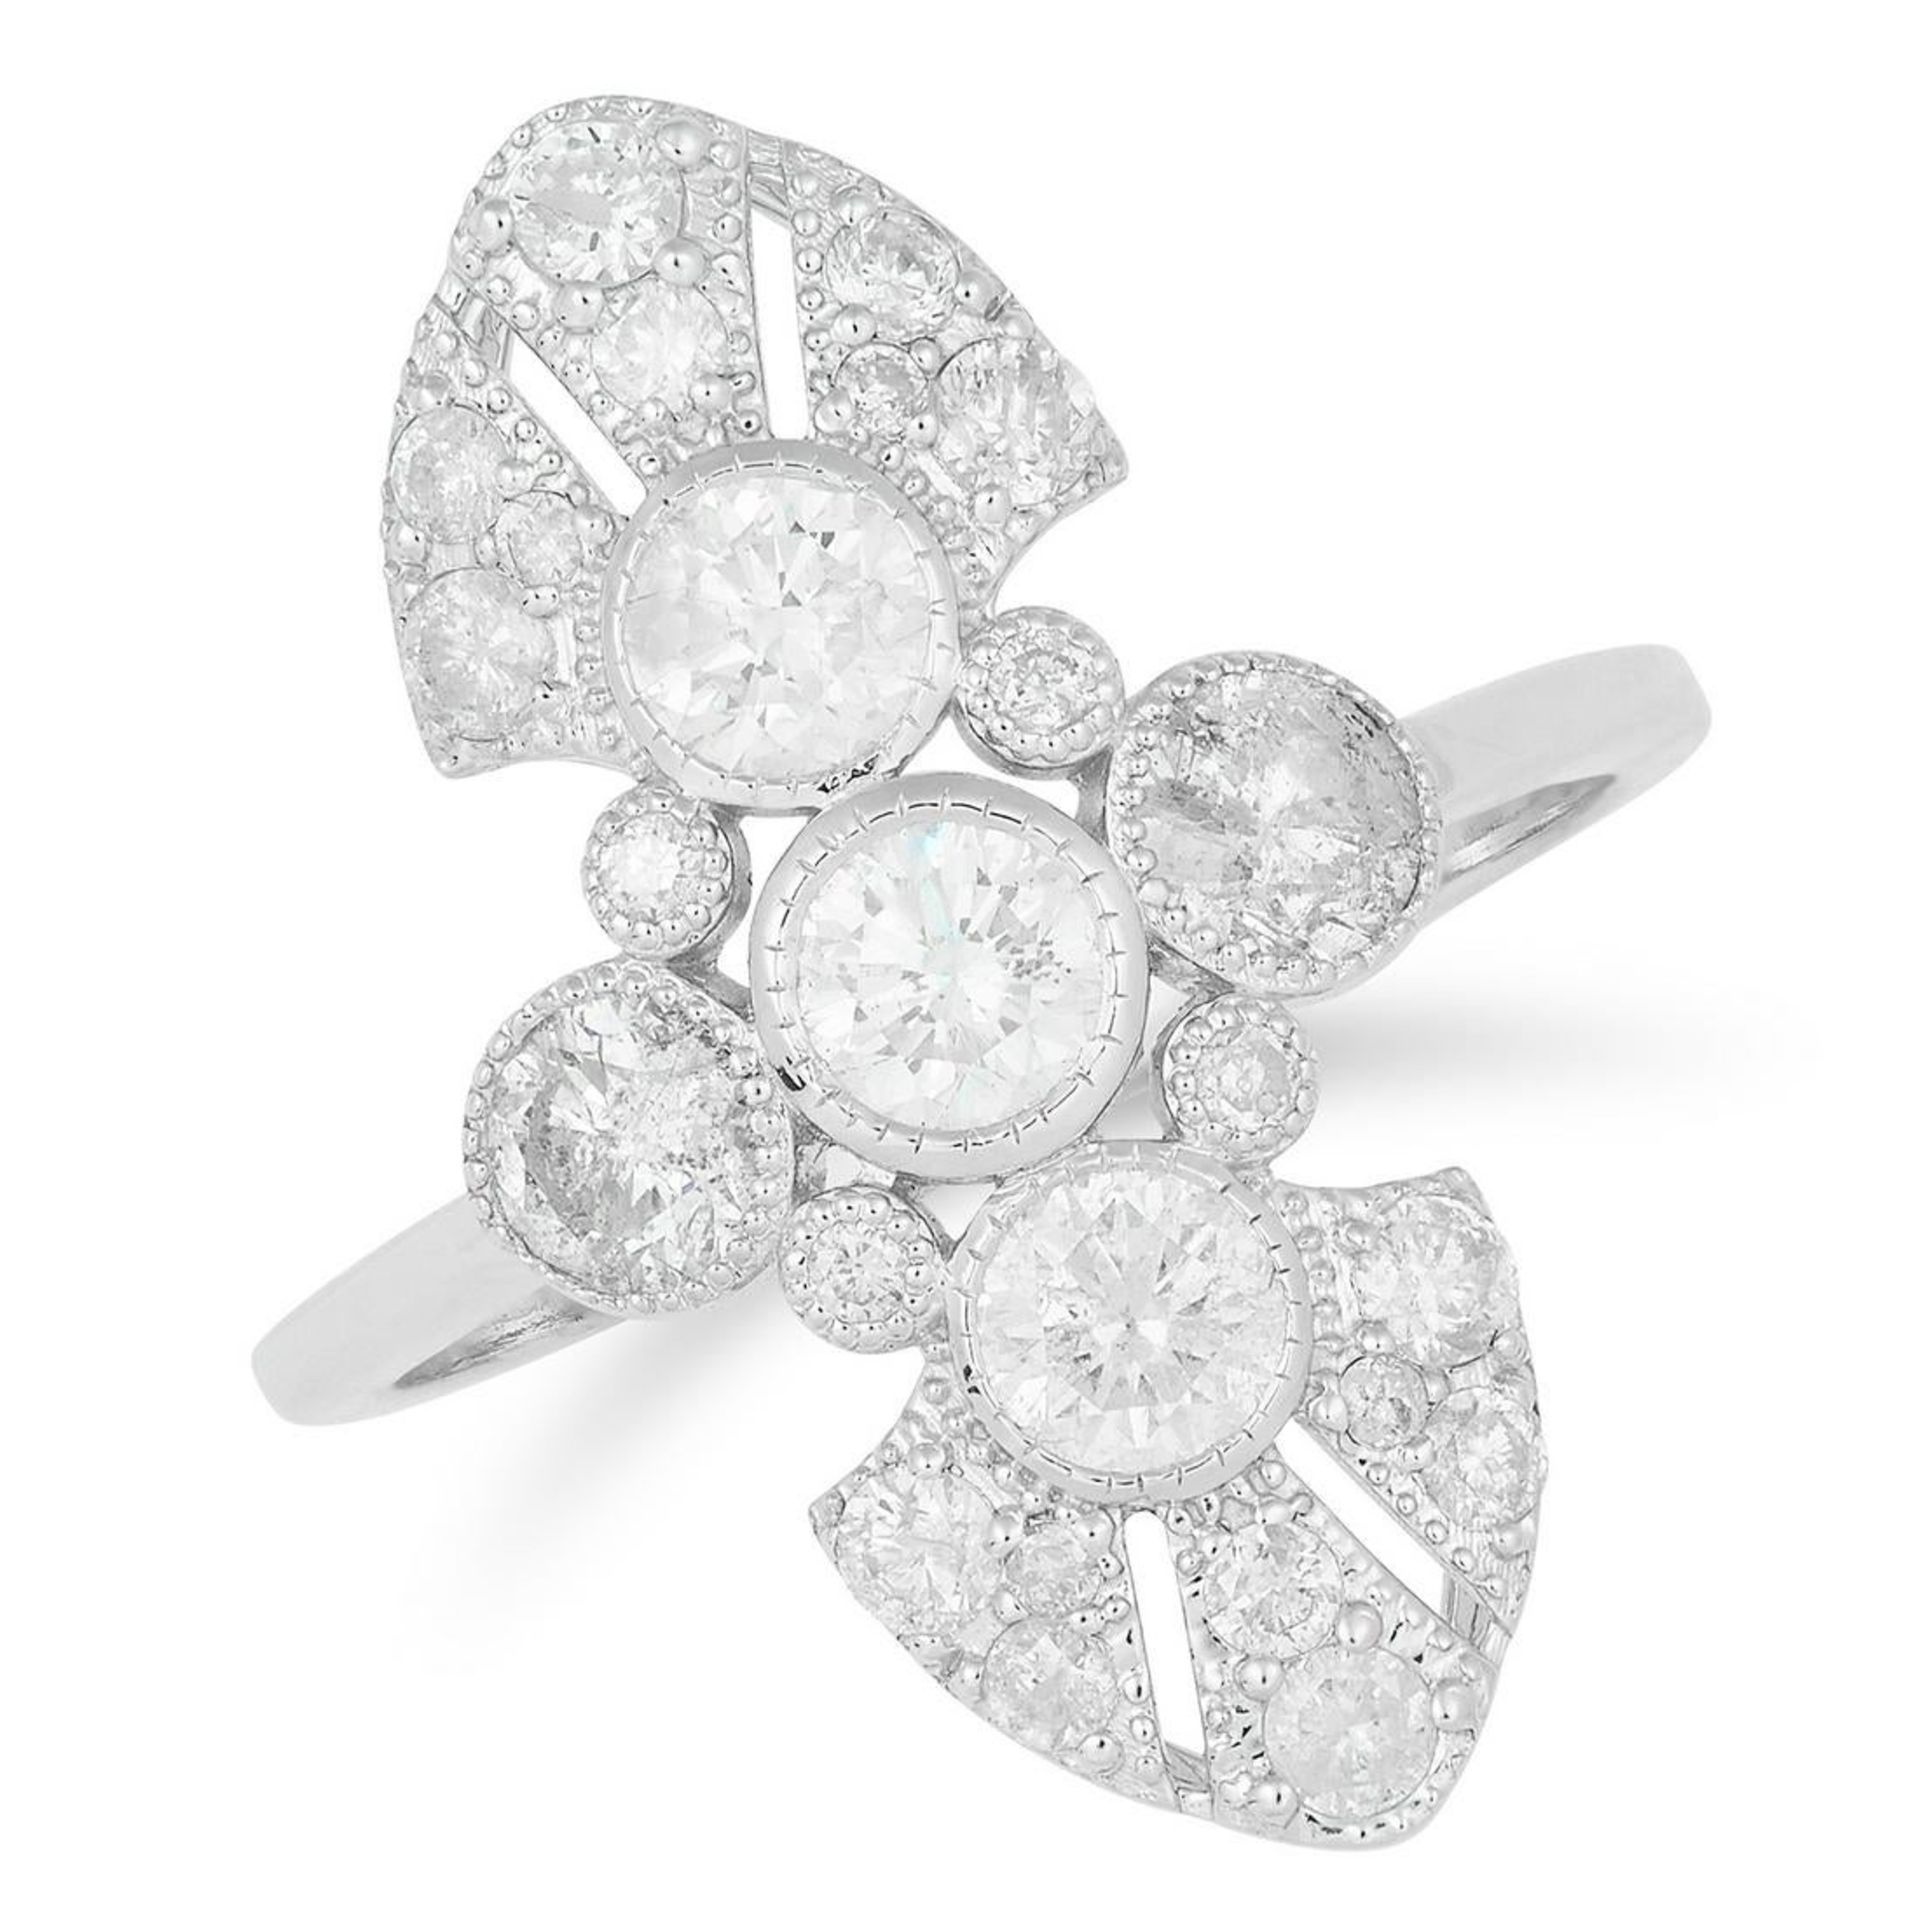 DIAMOND DRESS RING in Art Deco design, set with round cut diamonds, size L / 5.5, 3g.